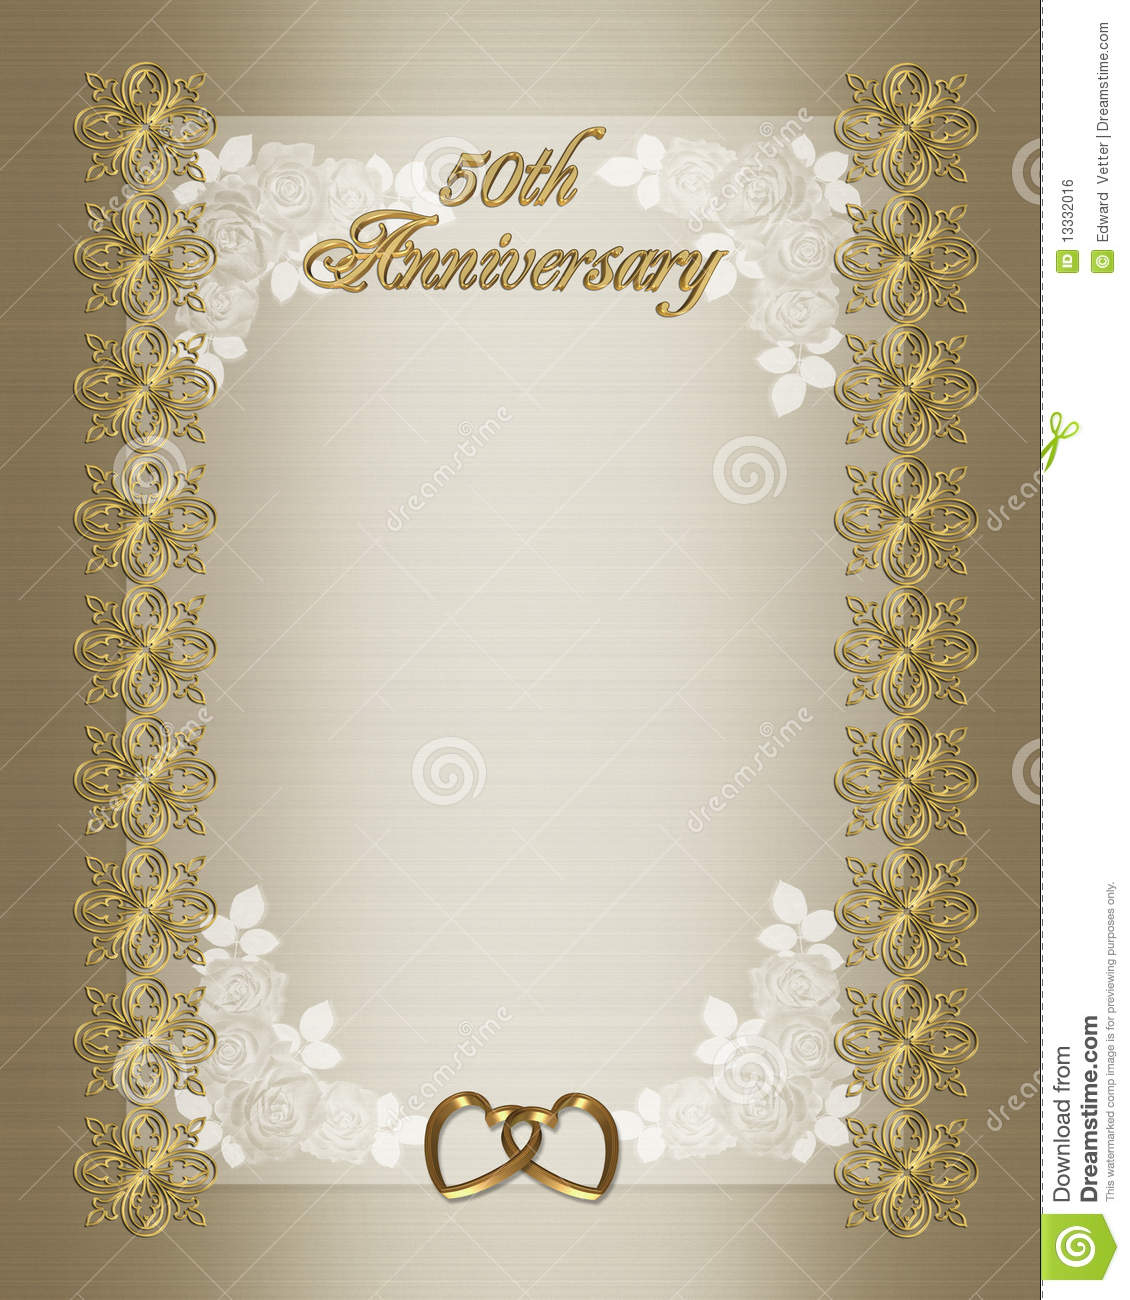 50th Wedding Anniversary Invitation Template Stock Illustration in measurements 1130 X 1300